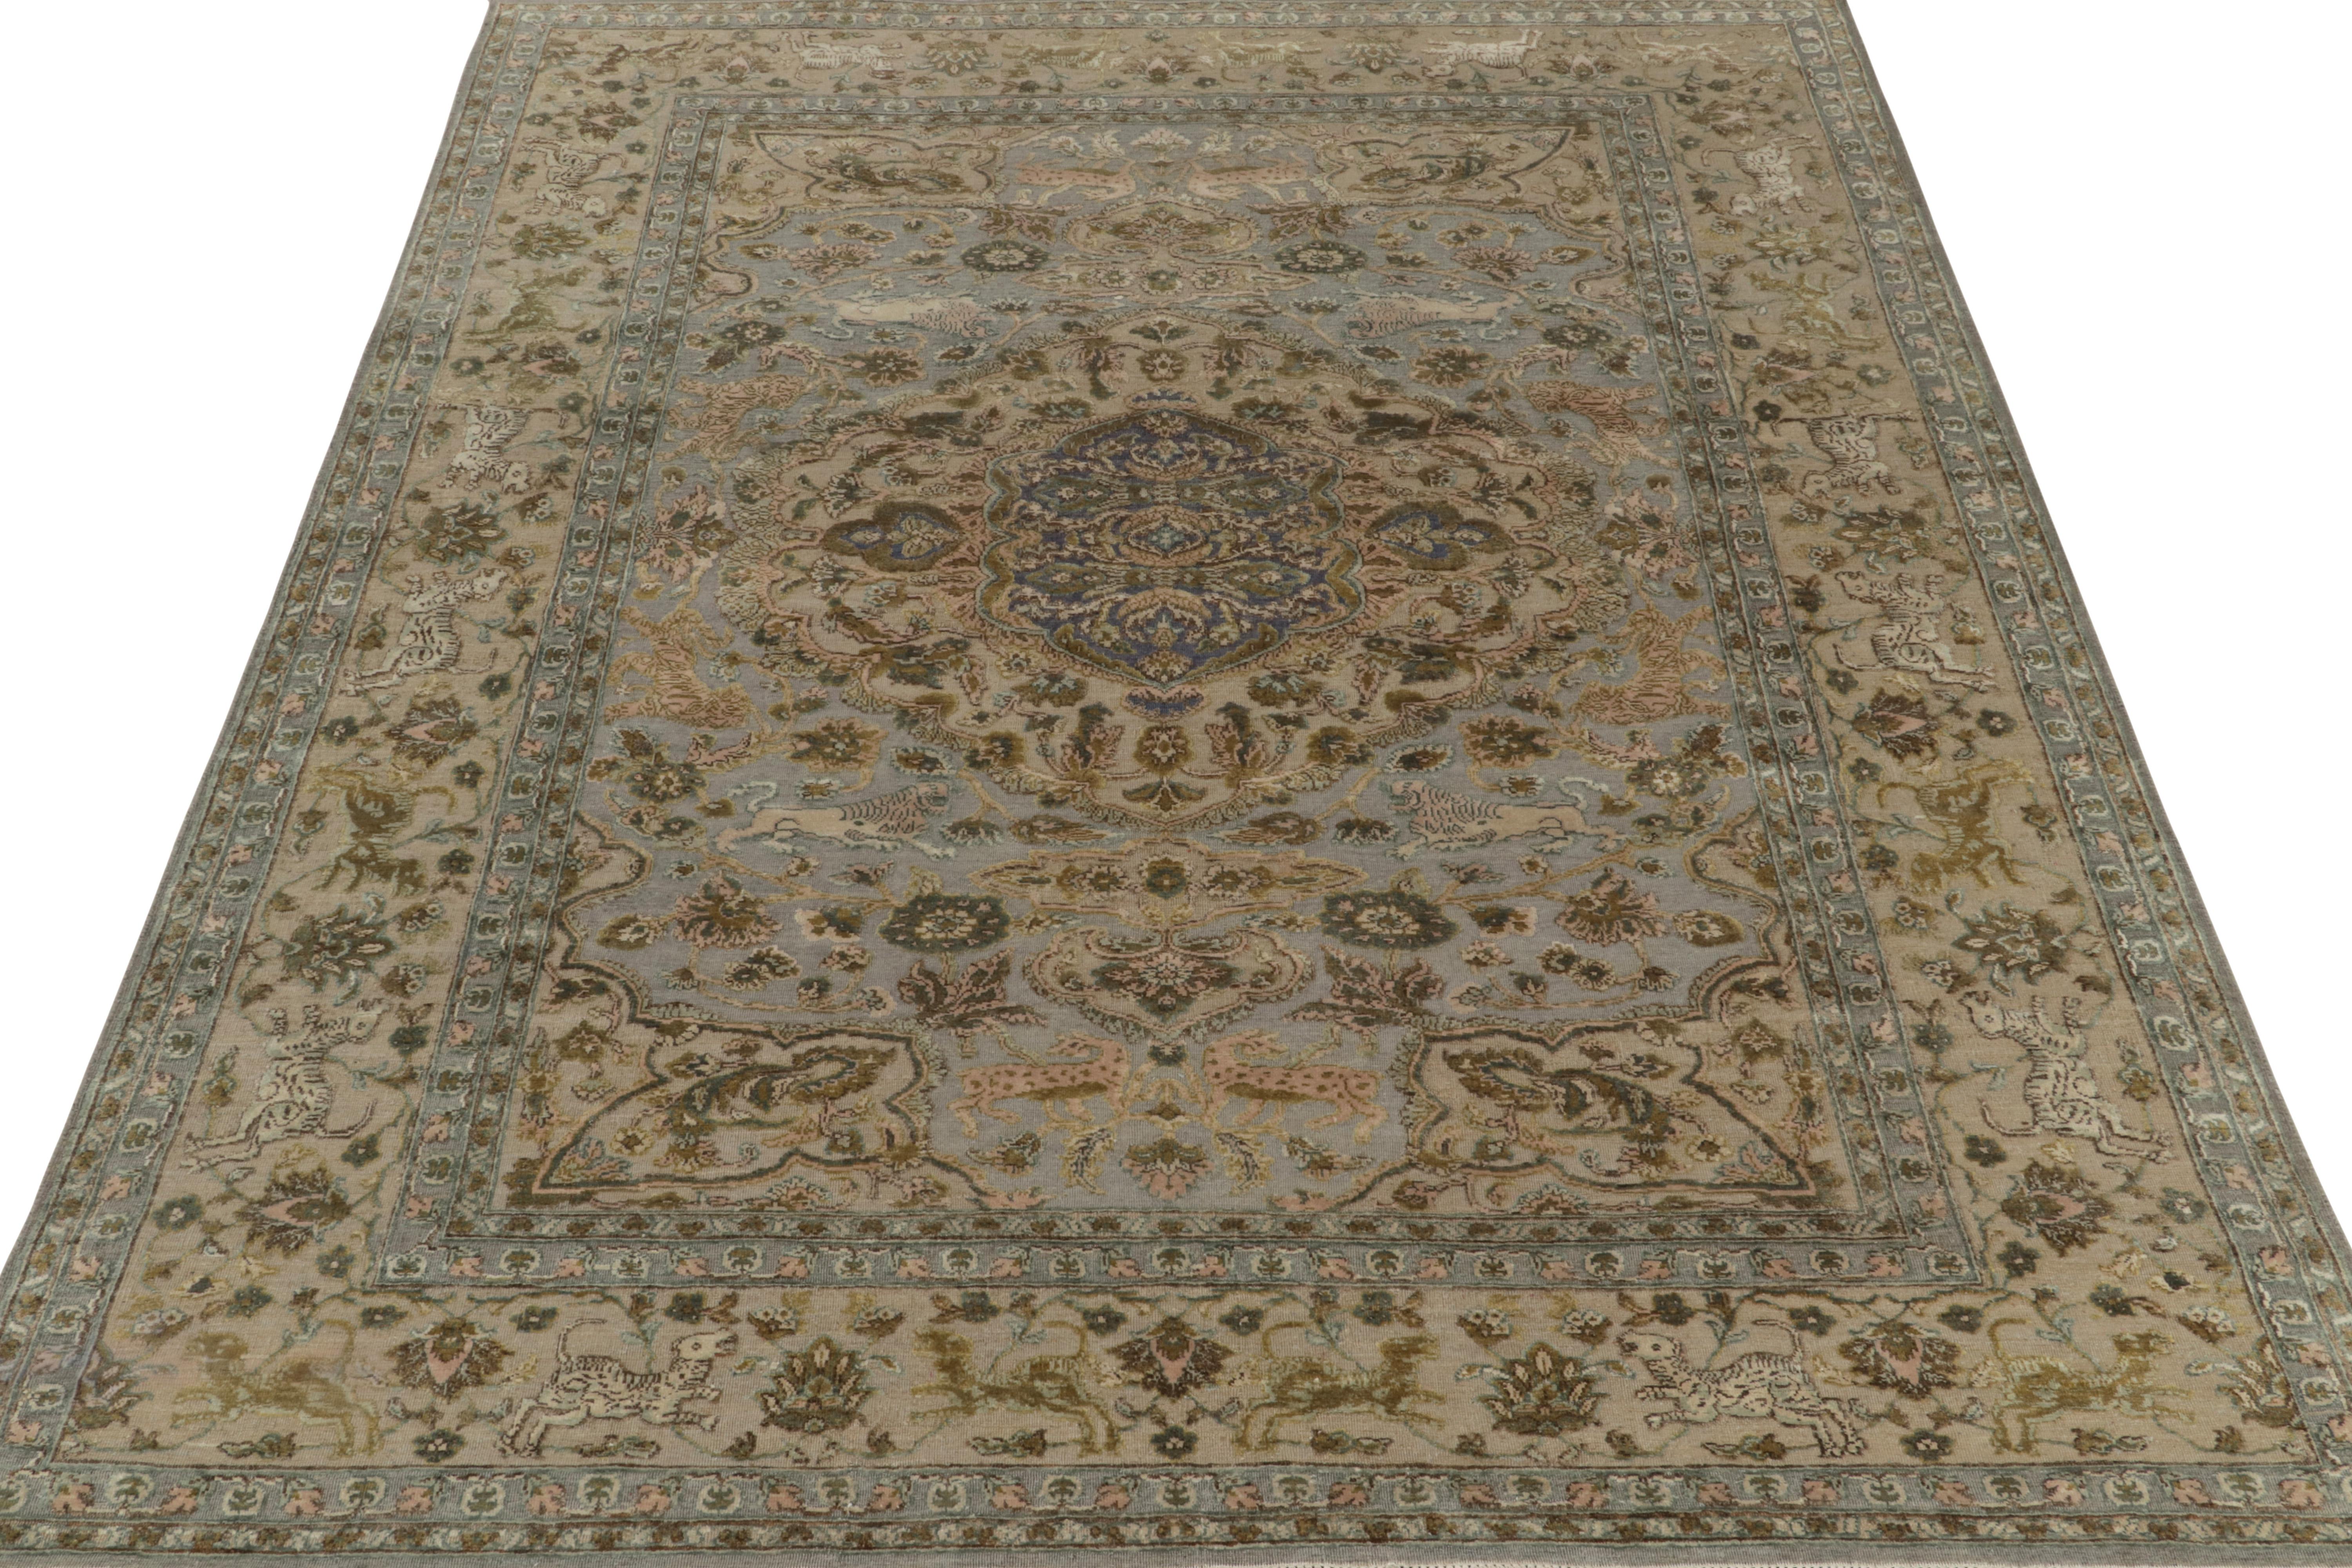 Indian Rug & Kilim’s Tabriz style Medallion rug in Blue, Green & Beige-Brown Pictorials For Sale